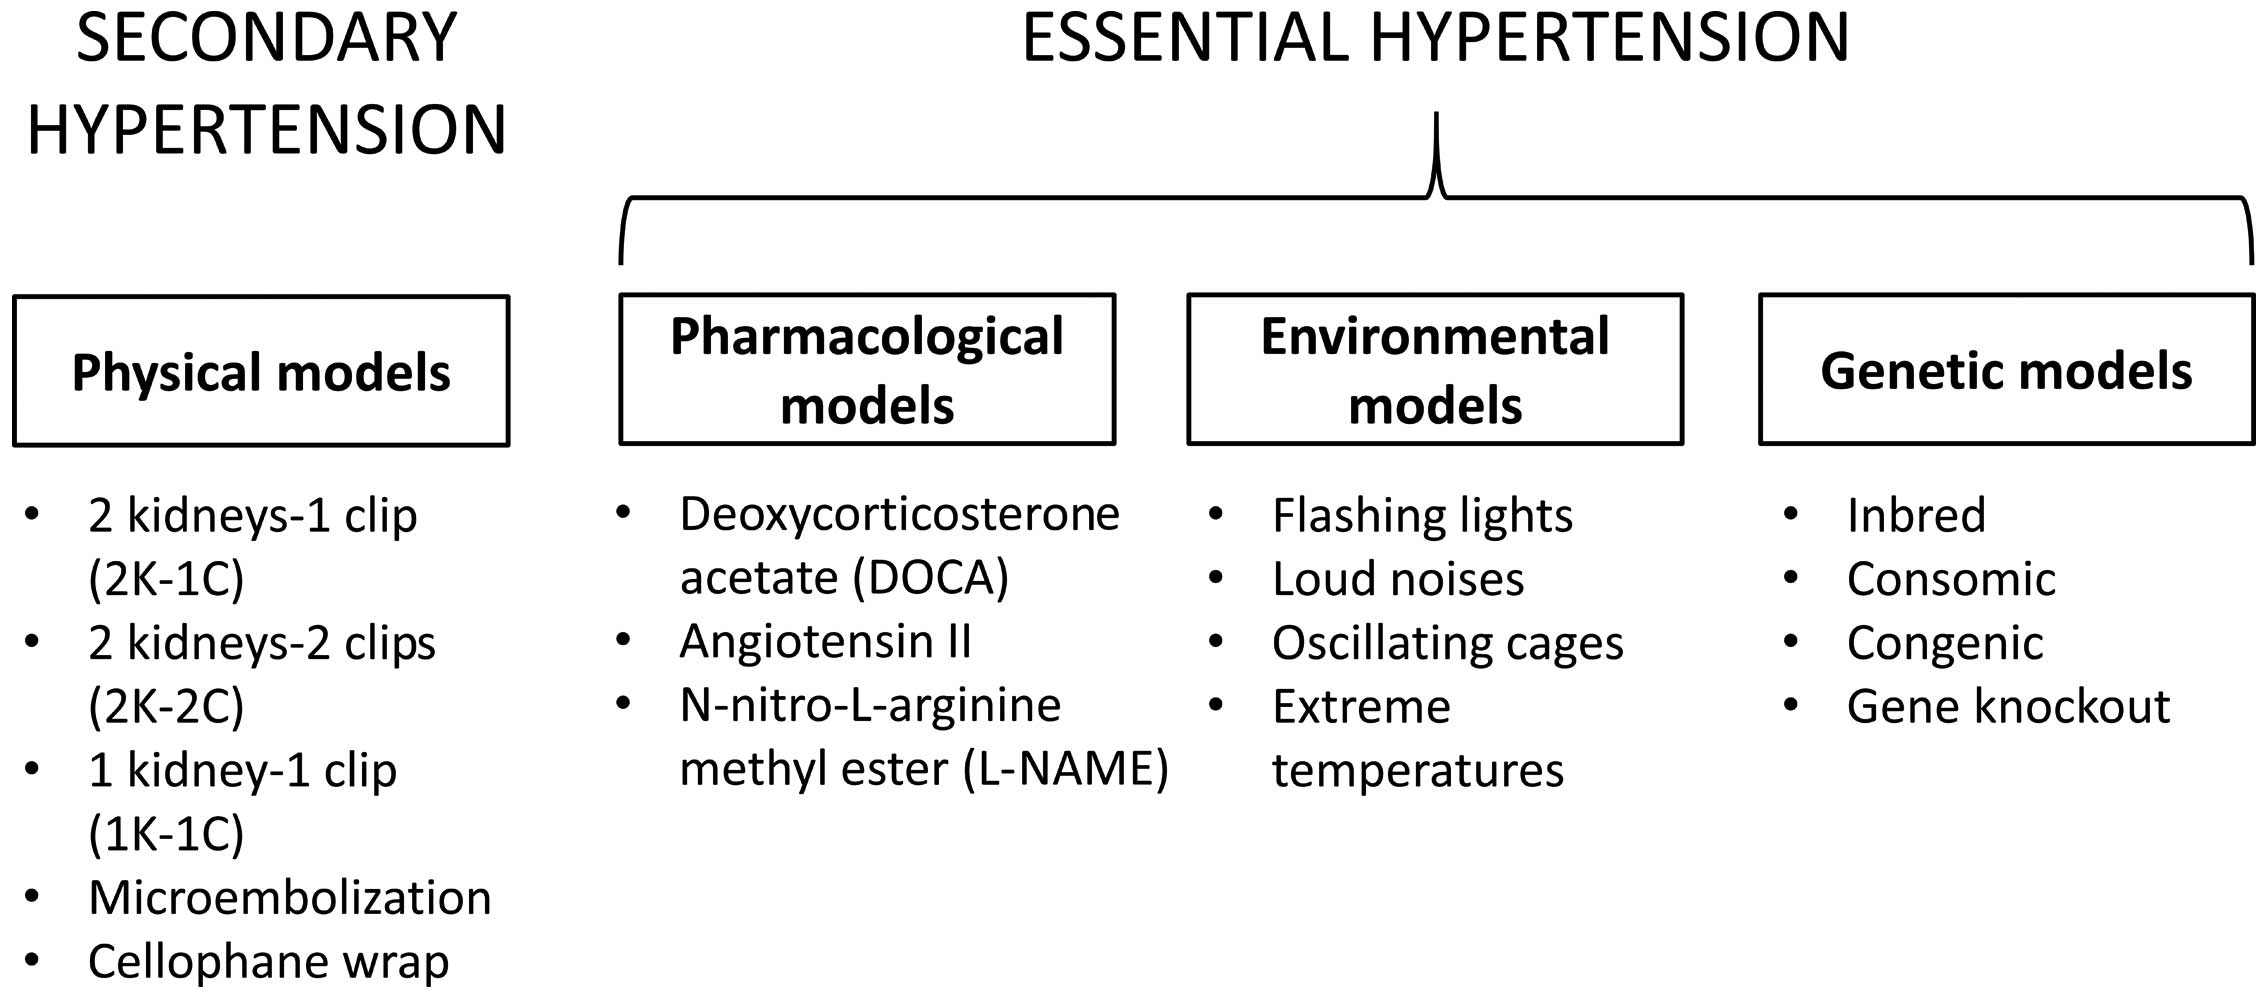 essential hypertension causes